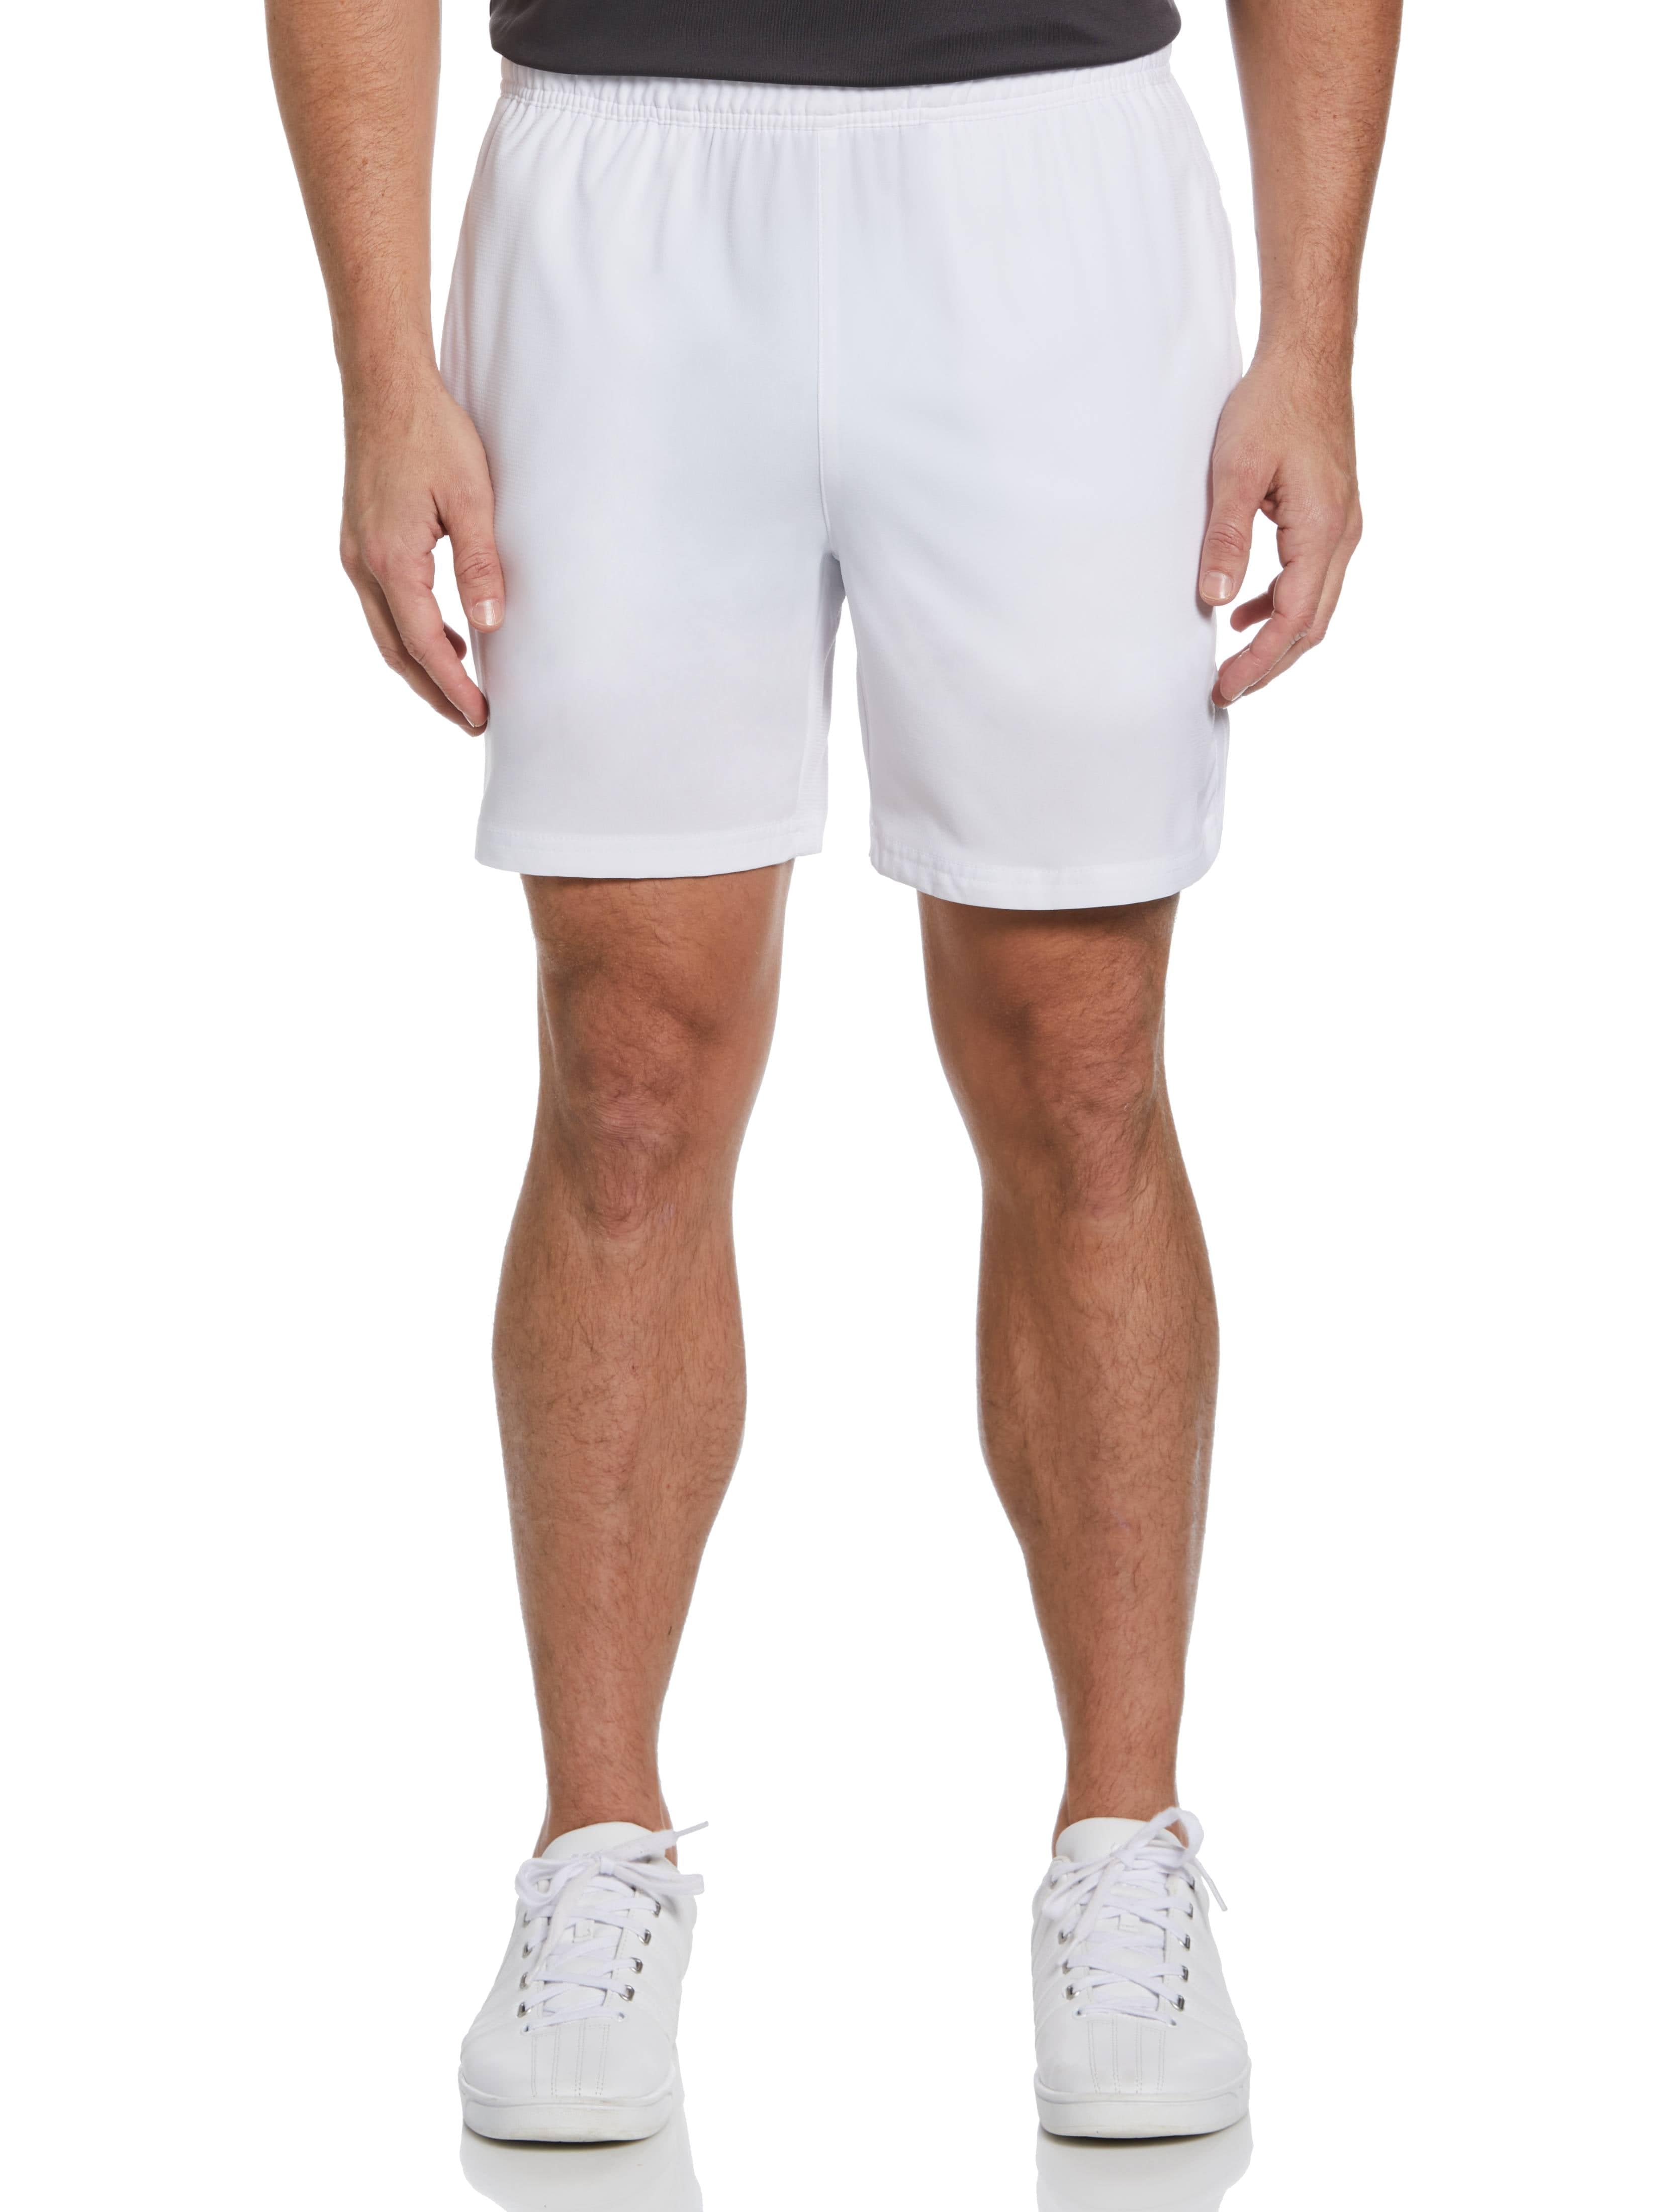 Grand Slam Mens Athletic Tennis Short, Size 2XL, Bright White/Bright White, Polyester/Elastane | Golf Apparel Shop